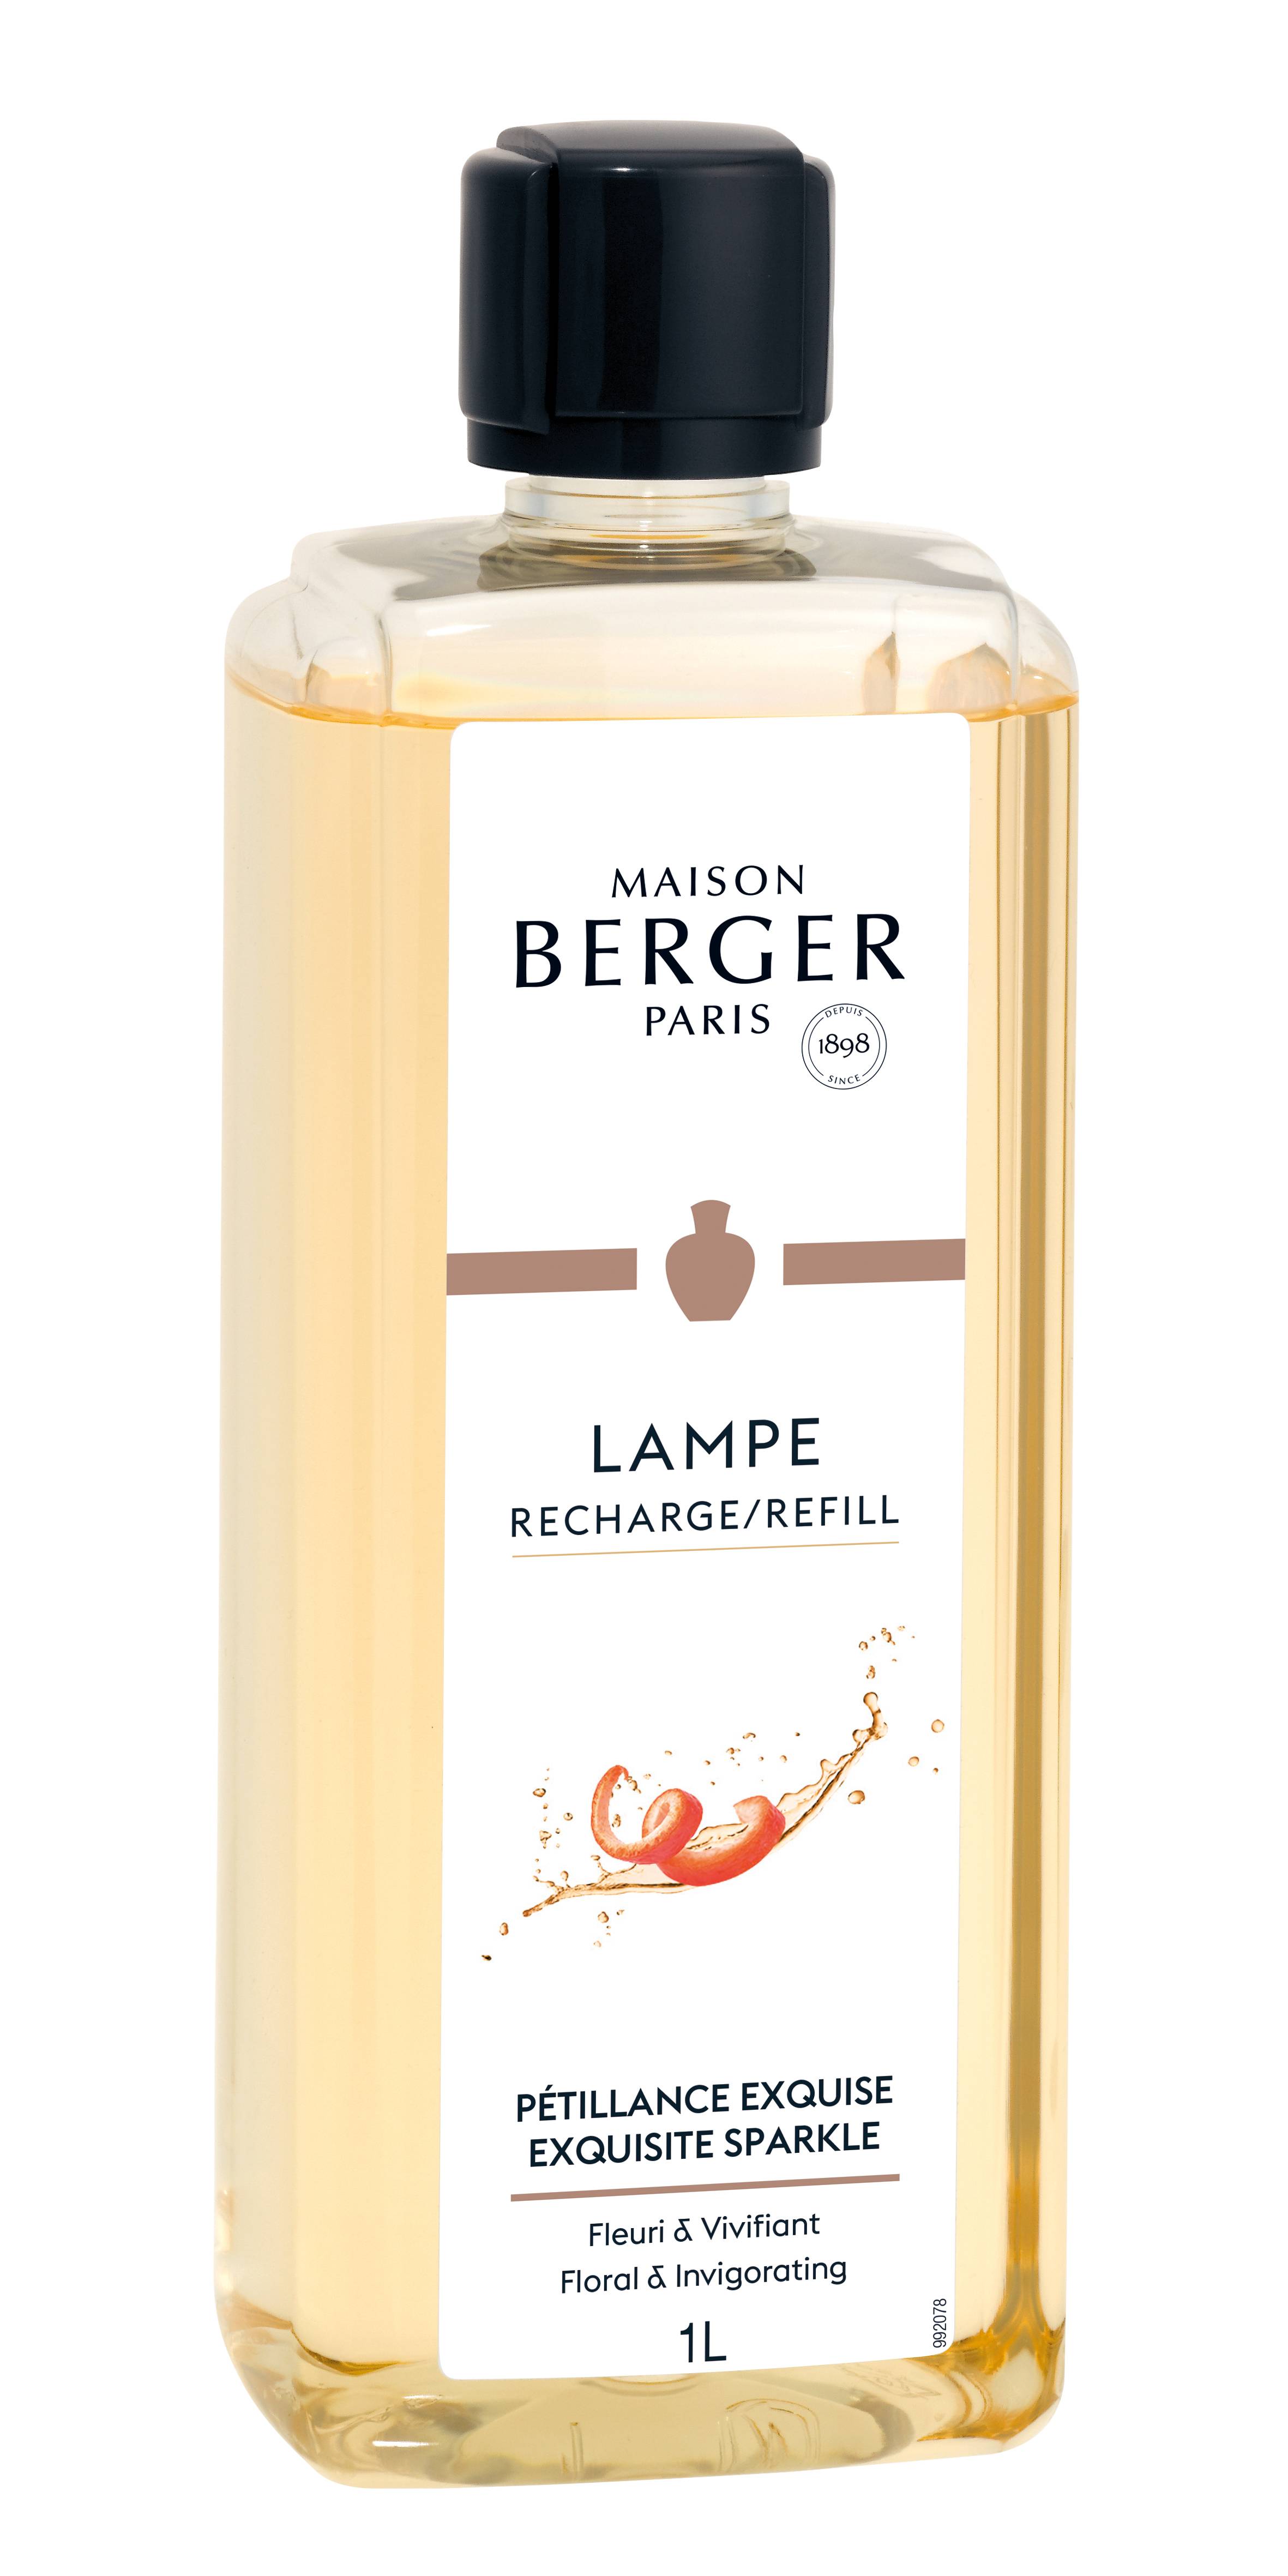 verkwistend Rijke man restjes Lampe Berger navulling Exquisite Sparkle kopen? | Woldring